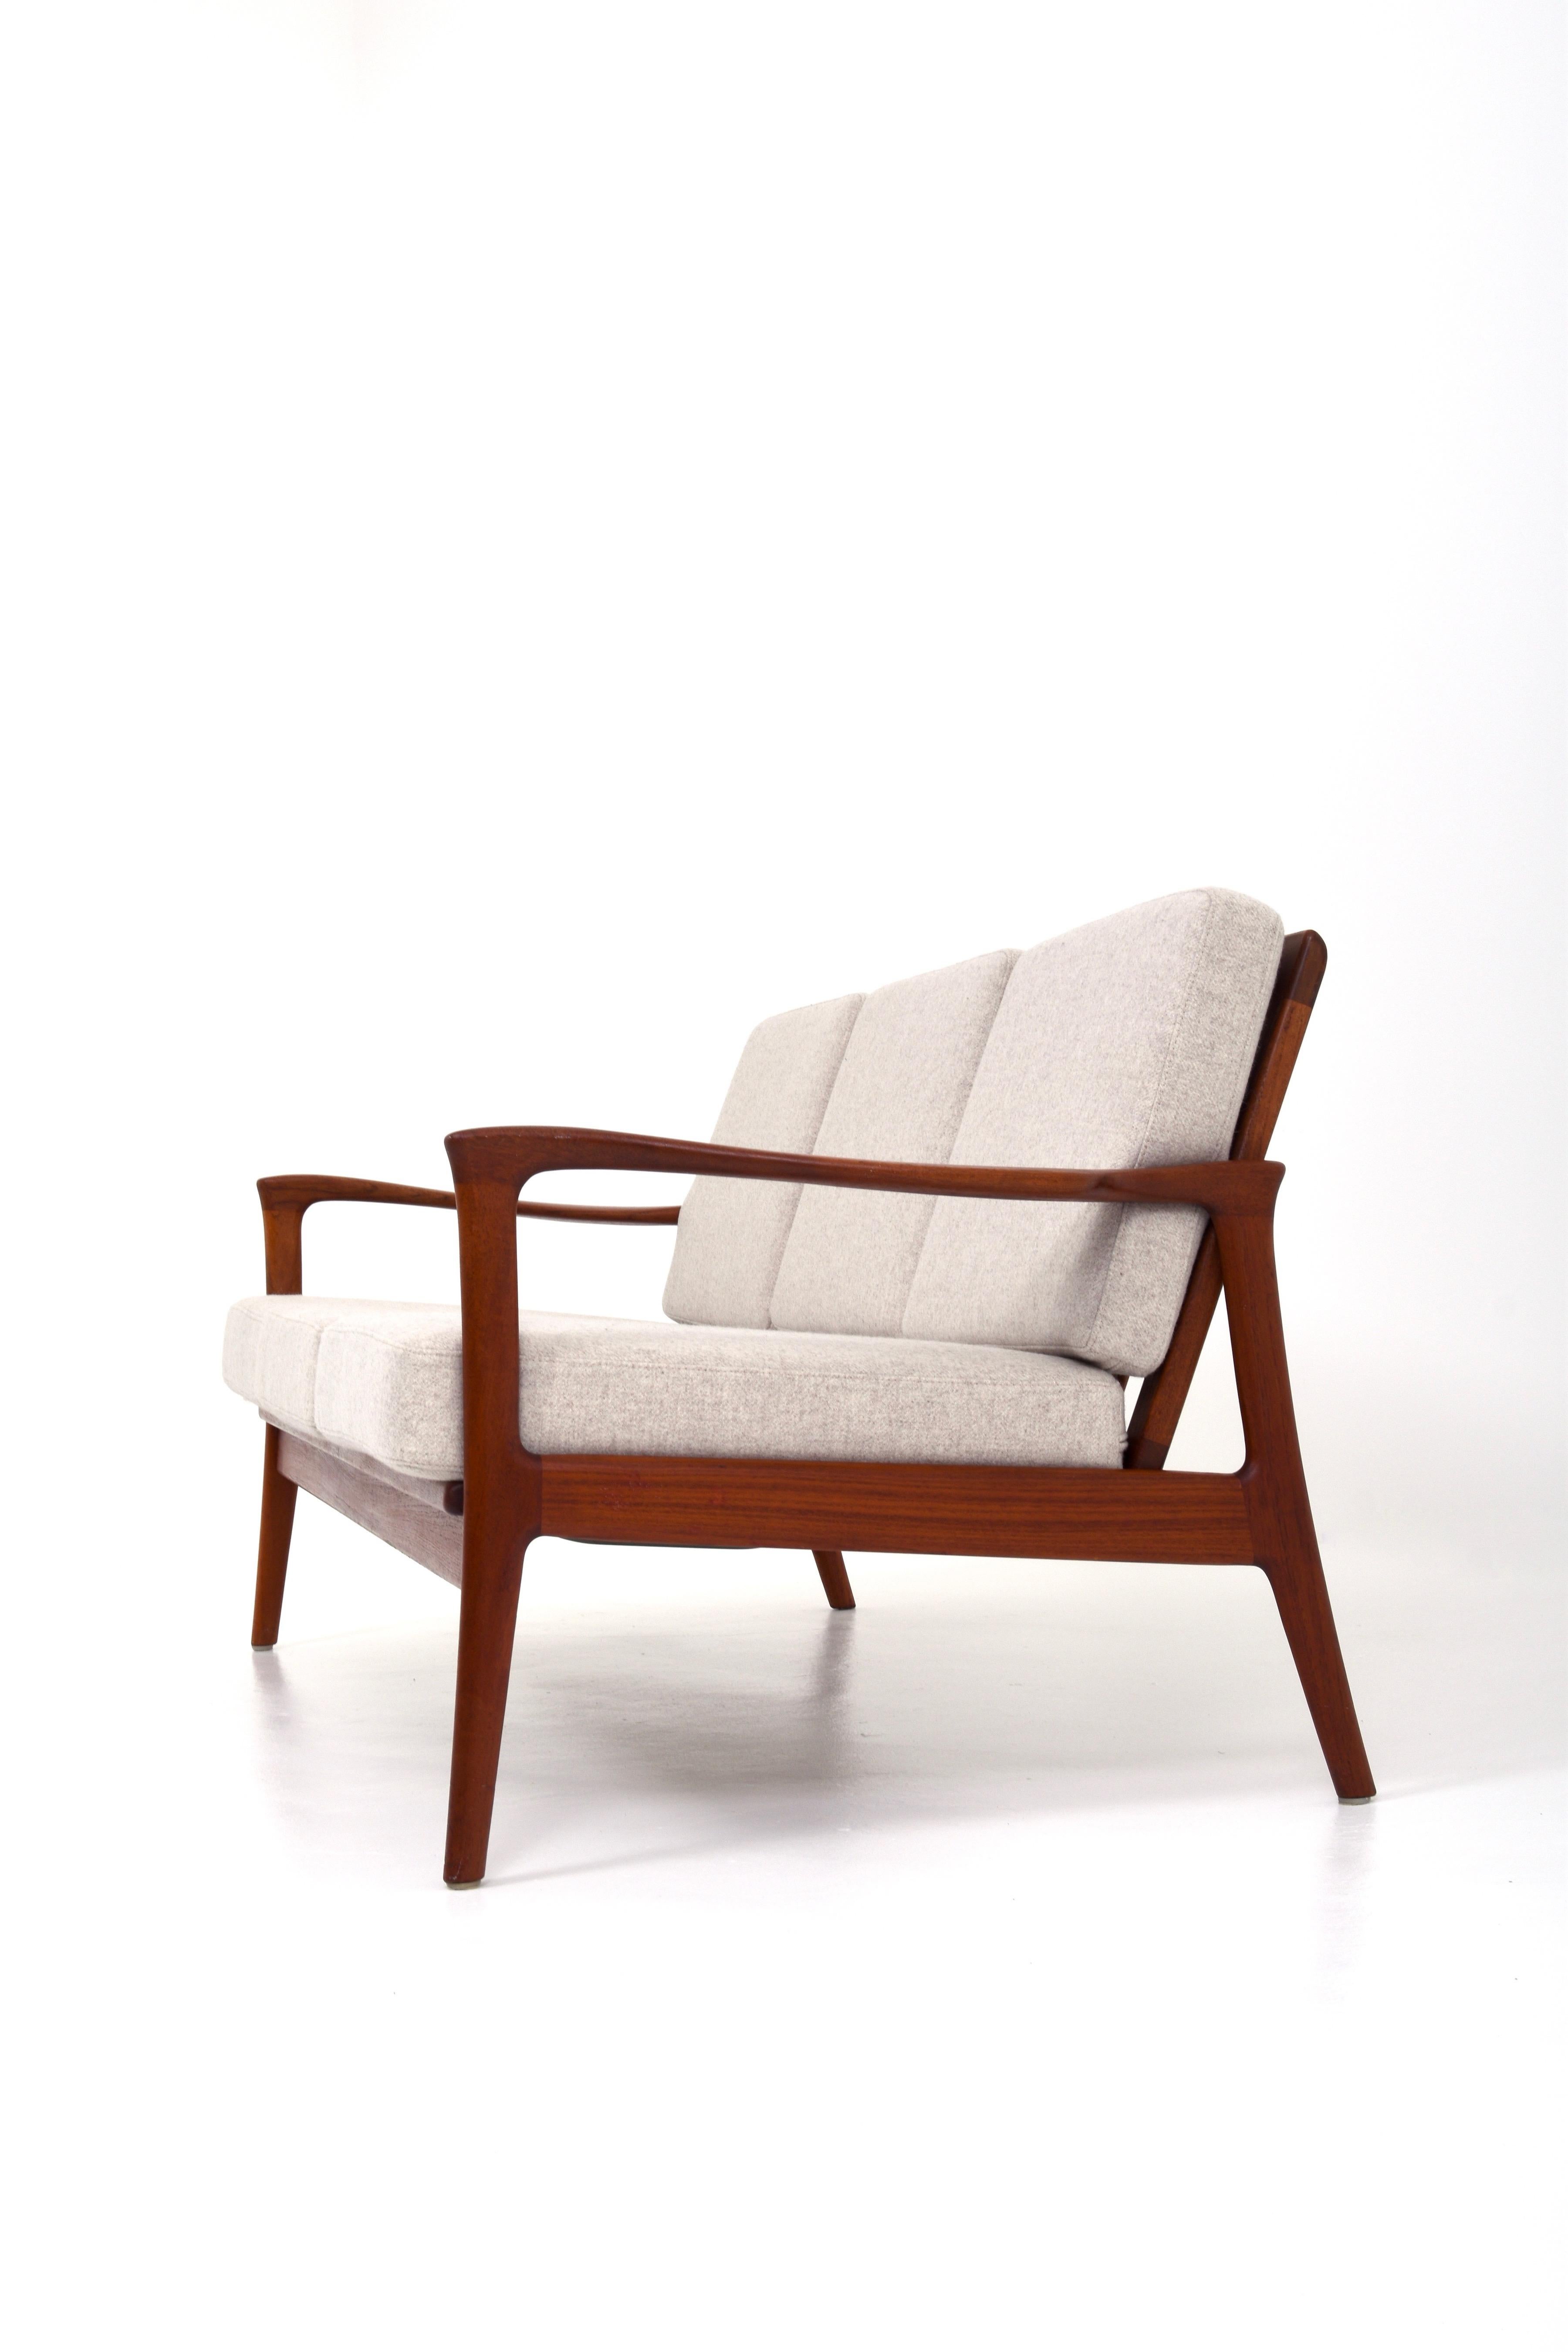 Wool Vintage Scandinavian Modern Sofa by C.E. Johansson for Bejra Möbel For Sale